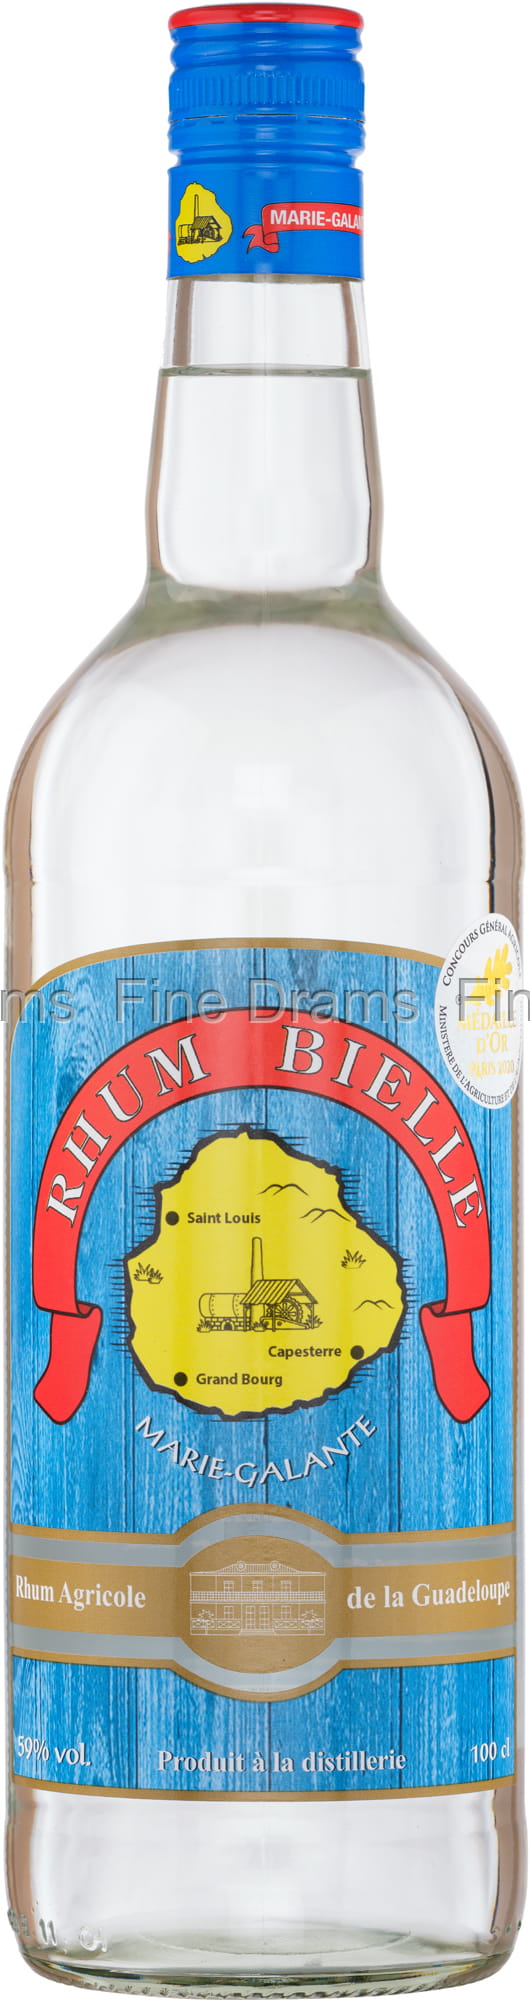 Bielle - Rhum Blanc